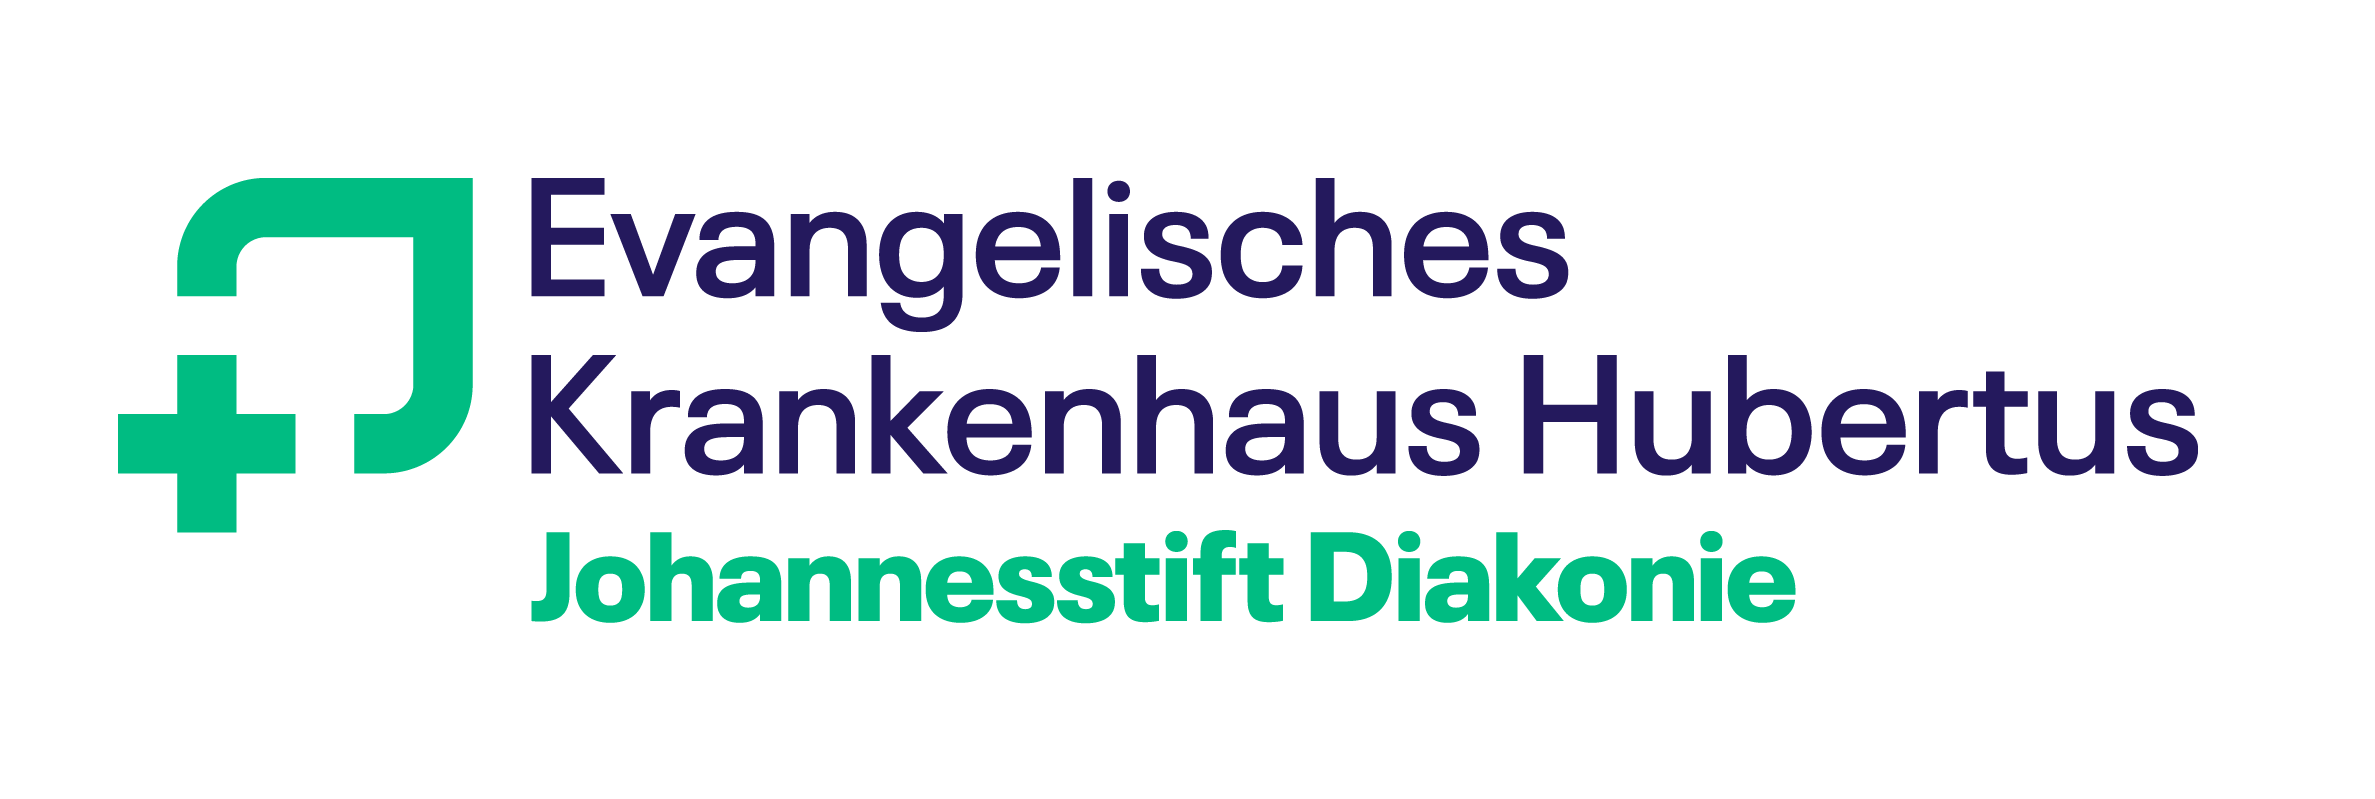 Logo: Evangelisches Krankenhaus Hubertus